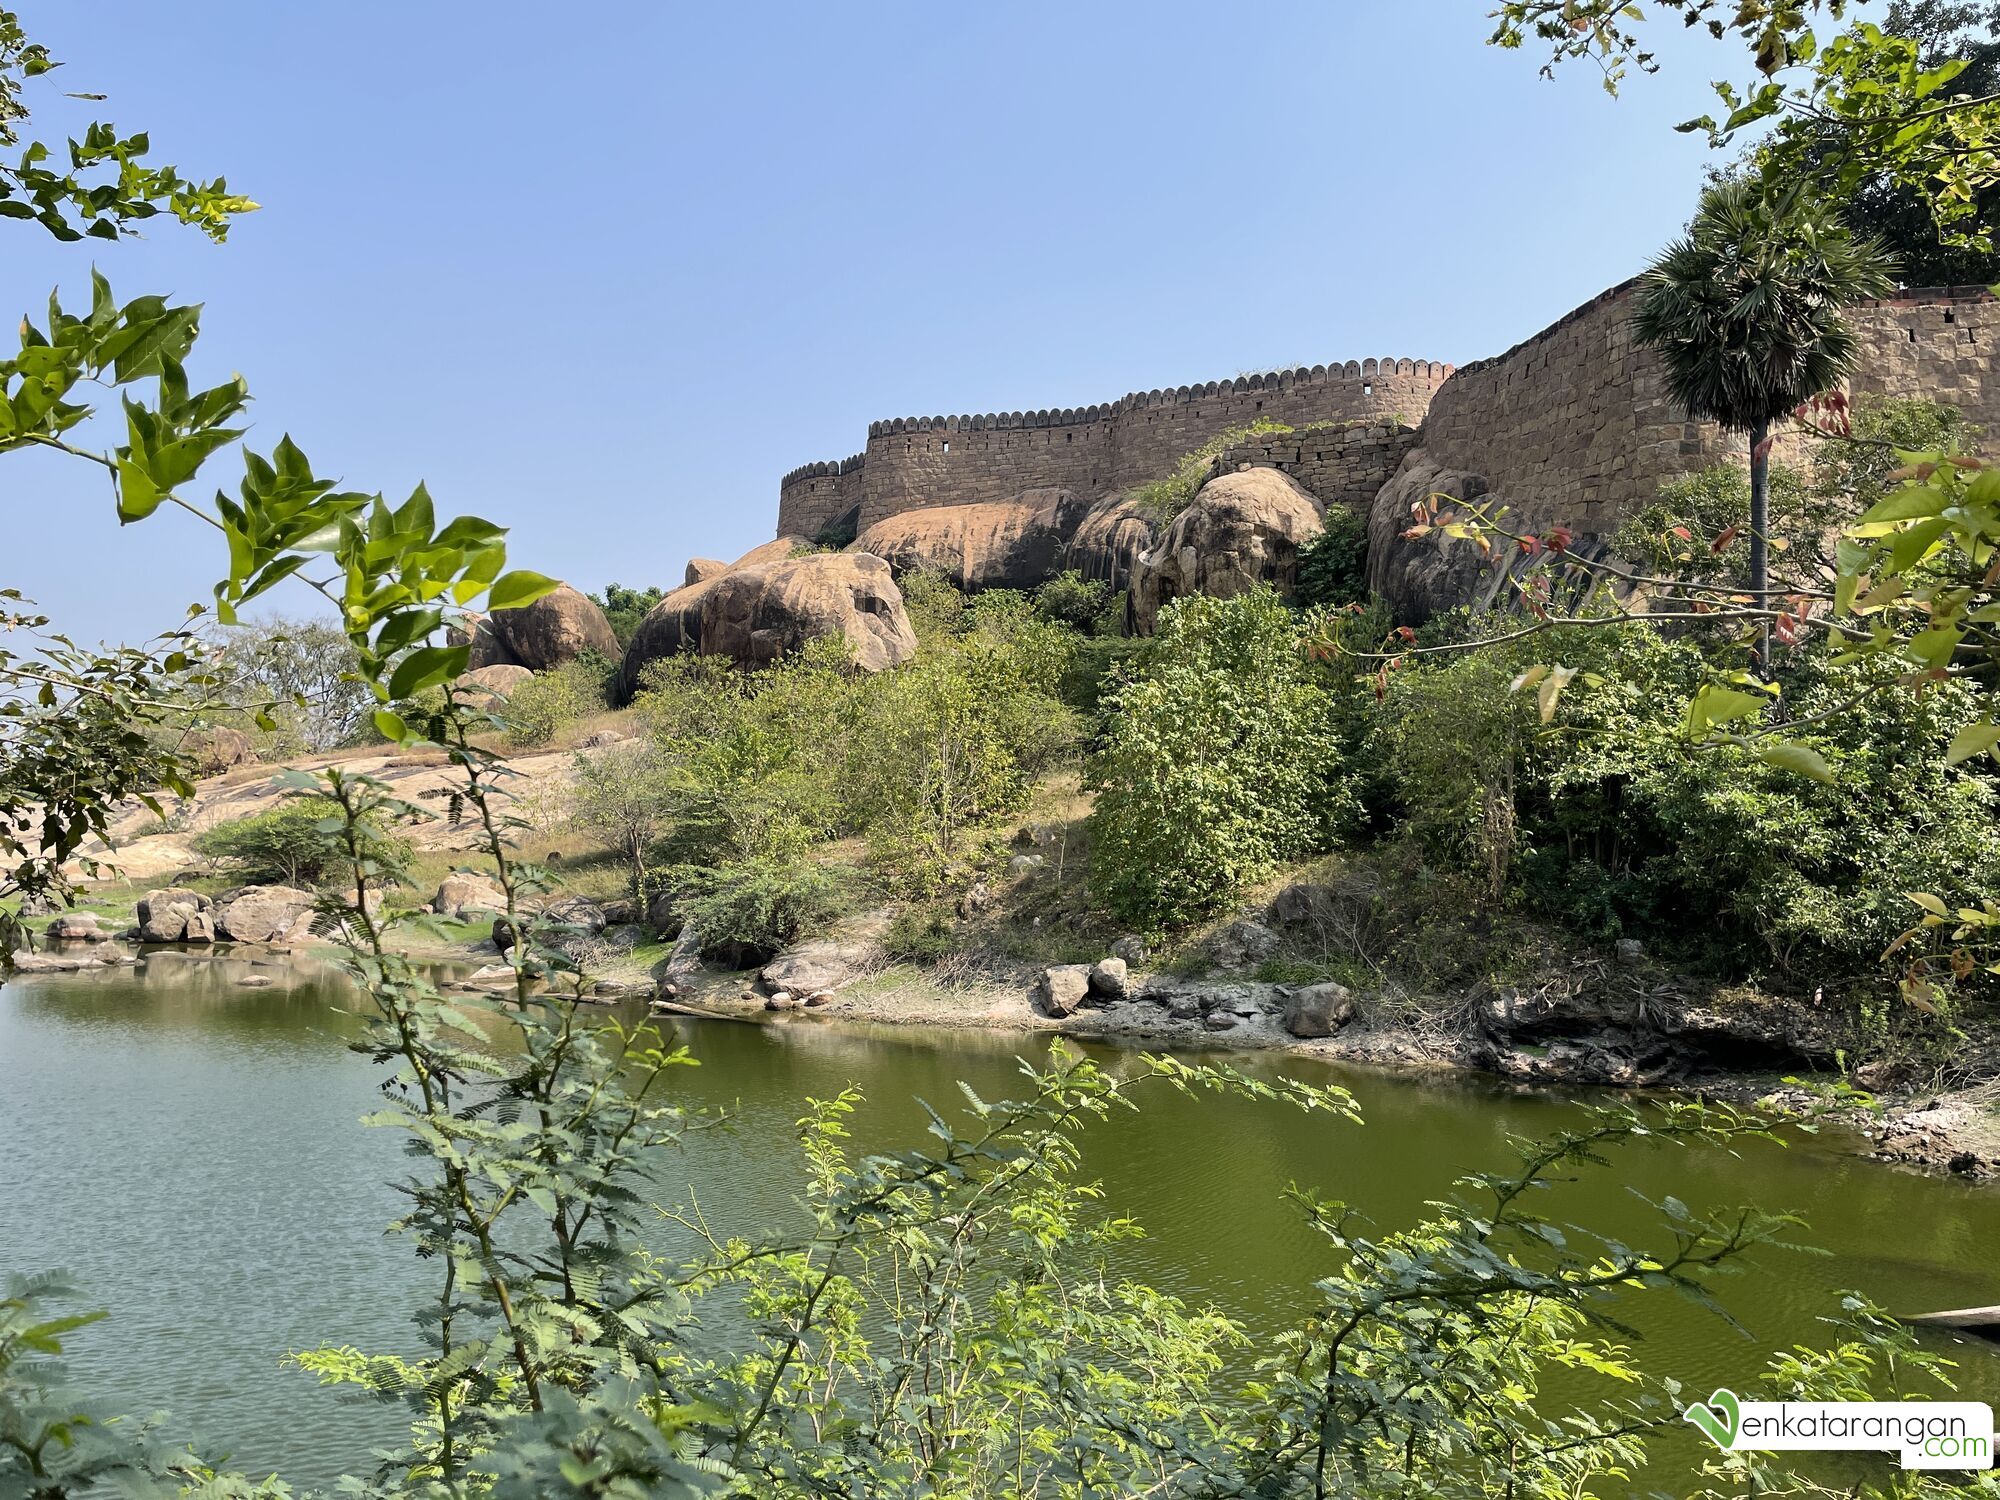 Thirumayam fort walls with the moat below